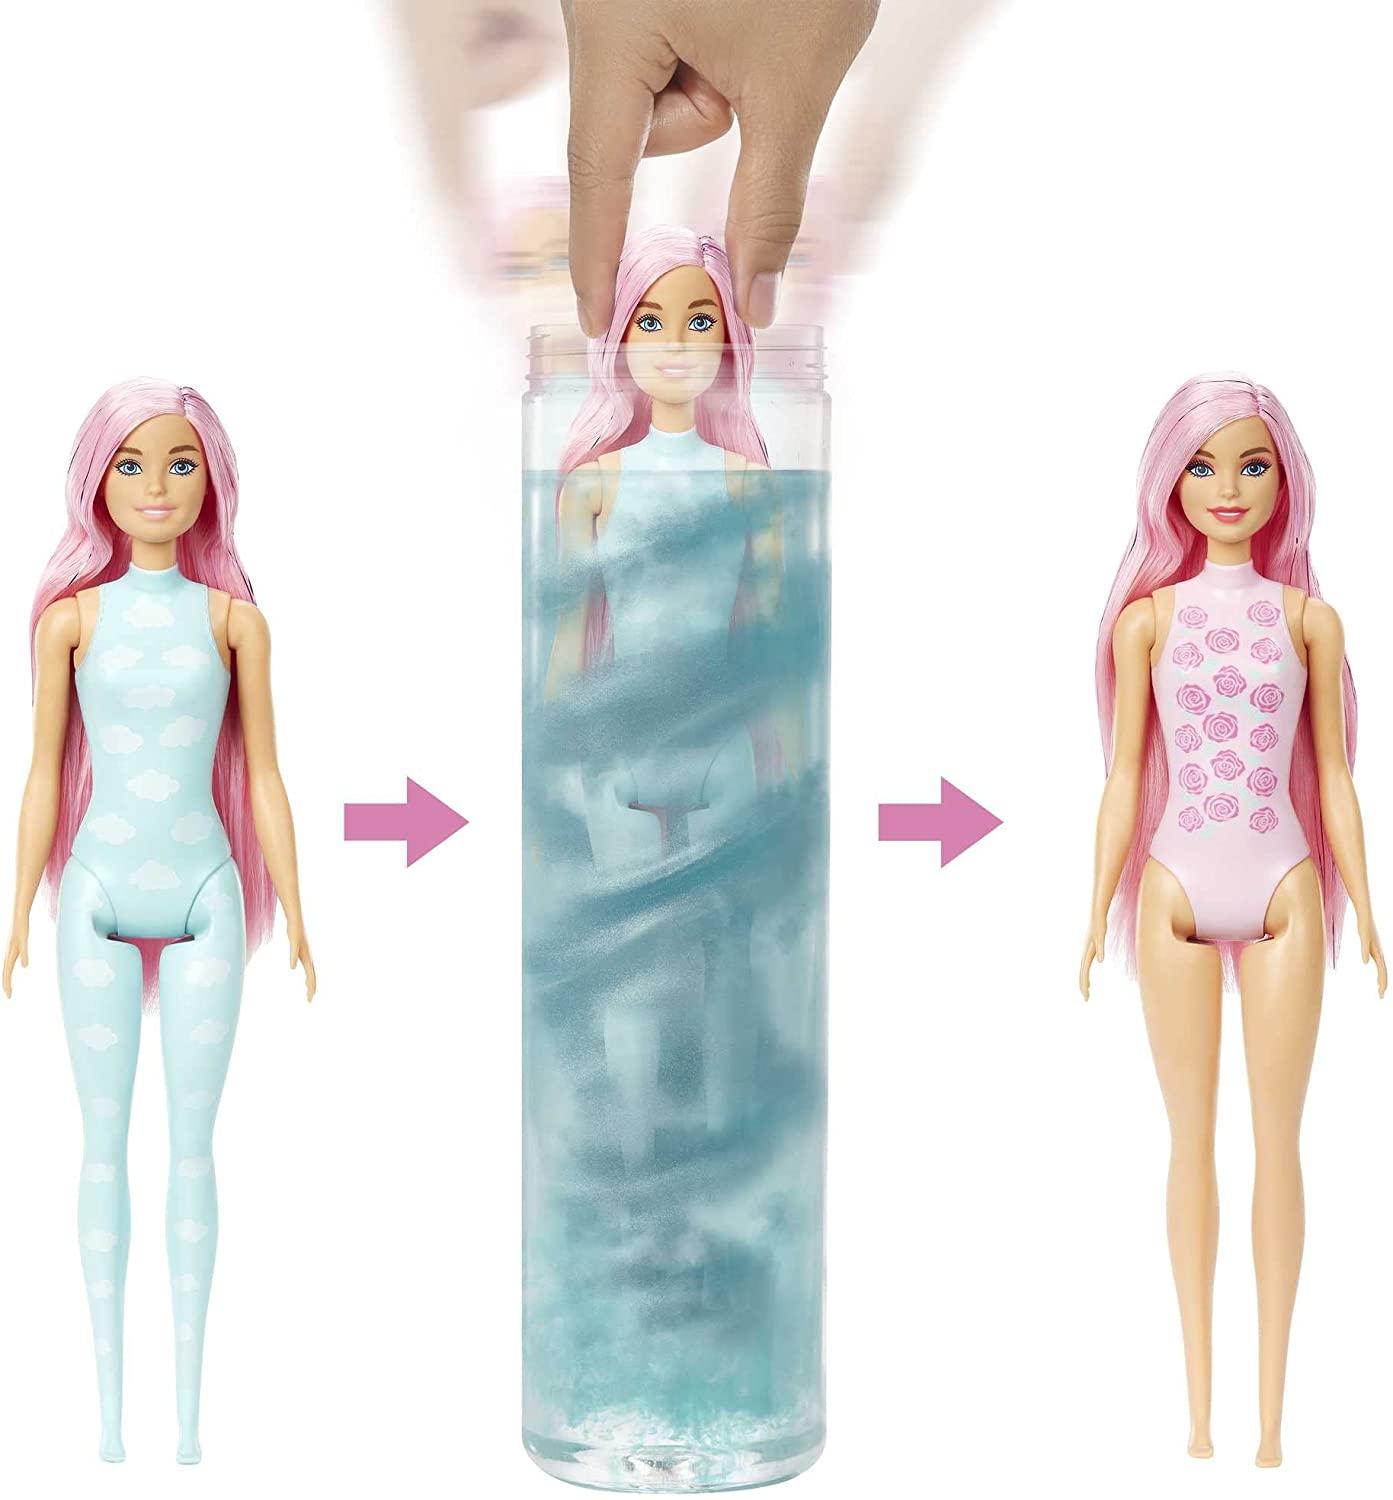 Barbie Color Reveal Dolls Neon Tie-Dye Series from Mattel Unboxing